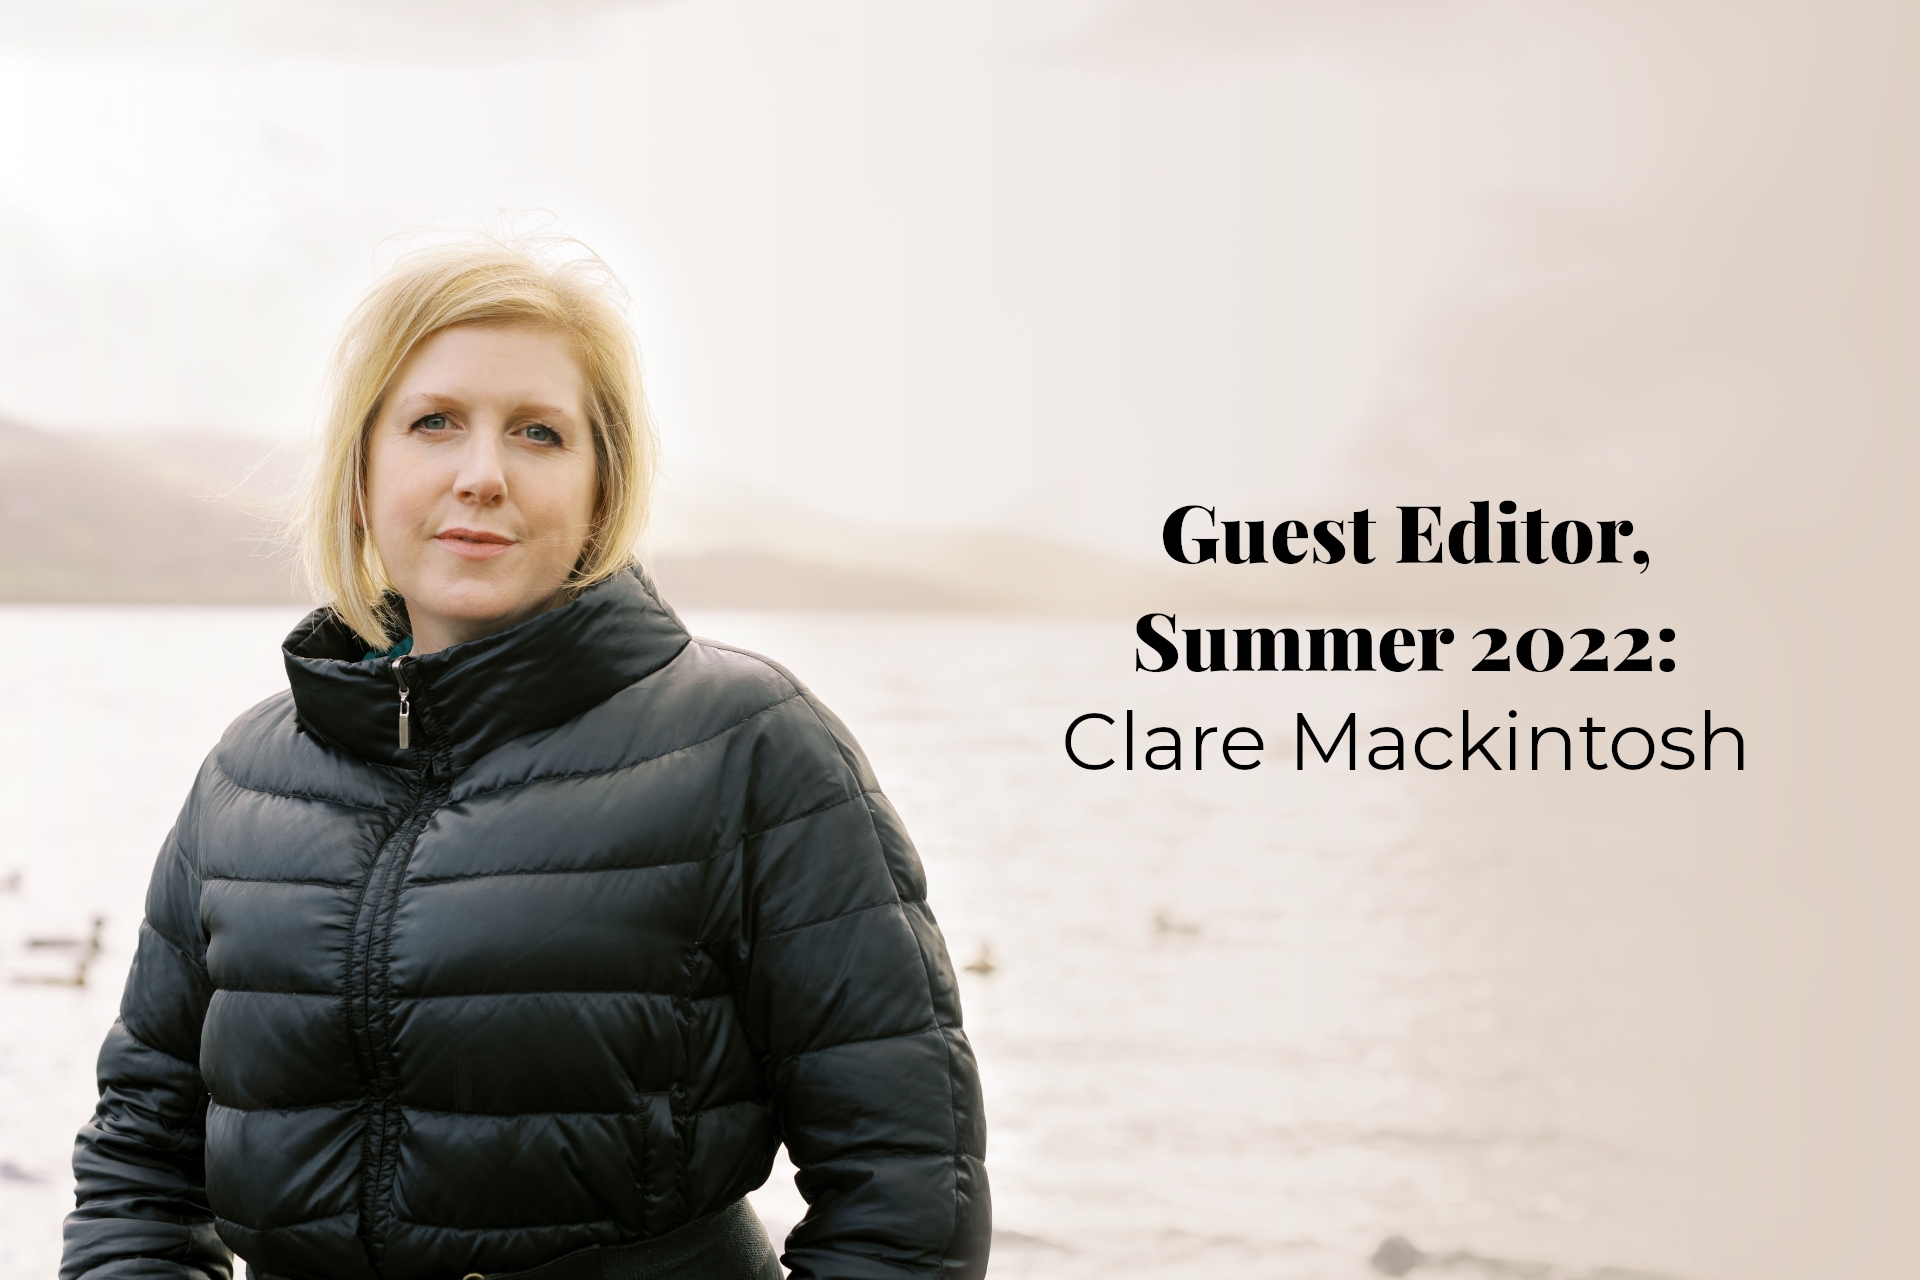 Guest Editor, Summer 2022 - Clare Mackintosh